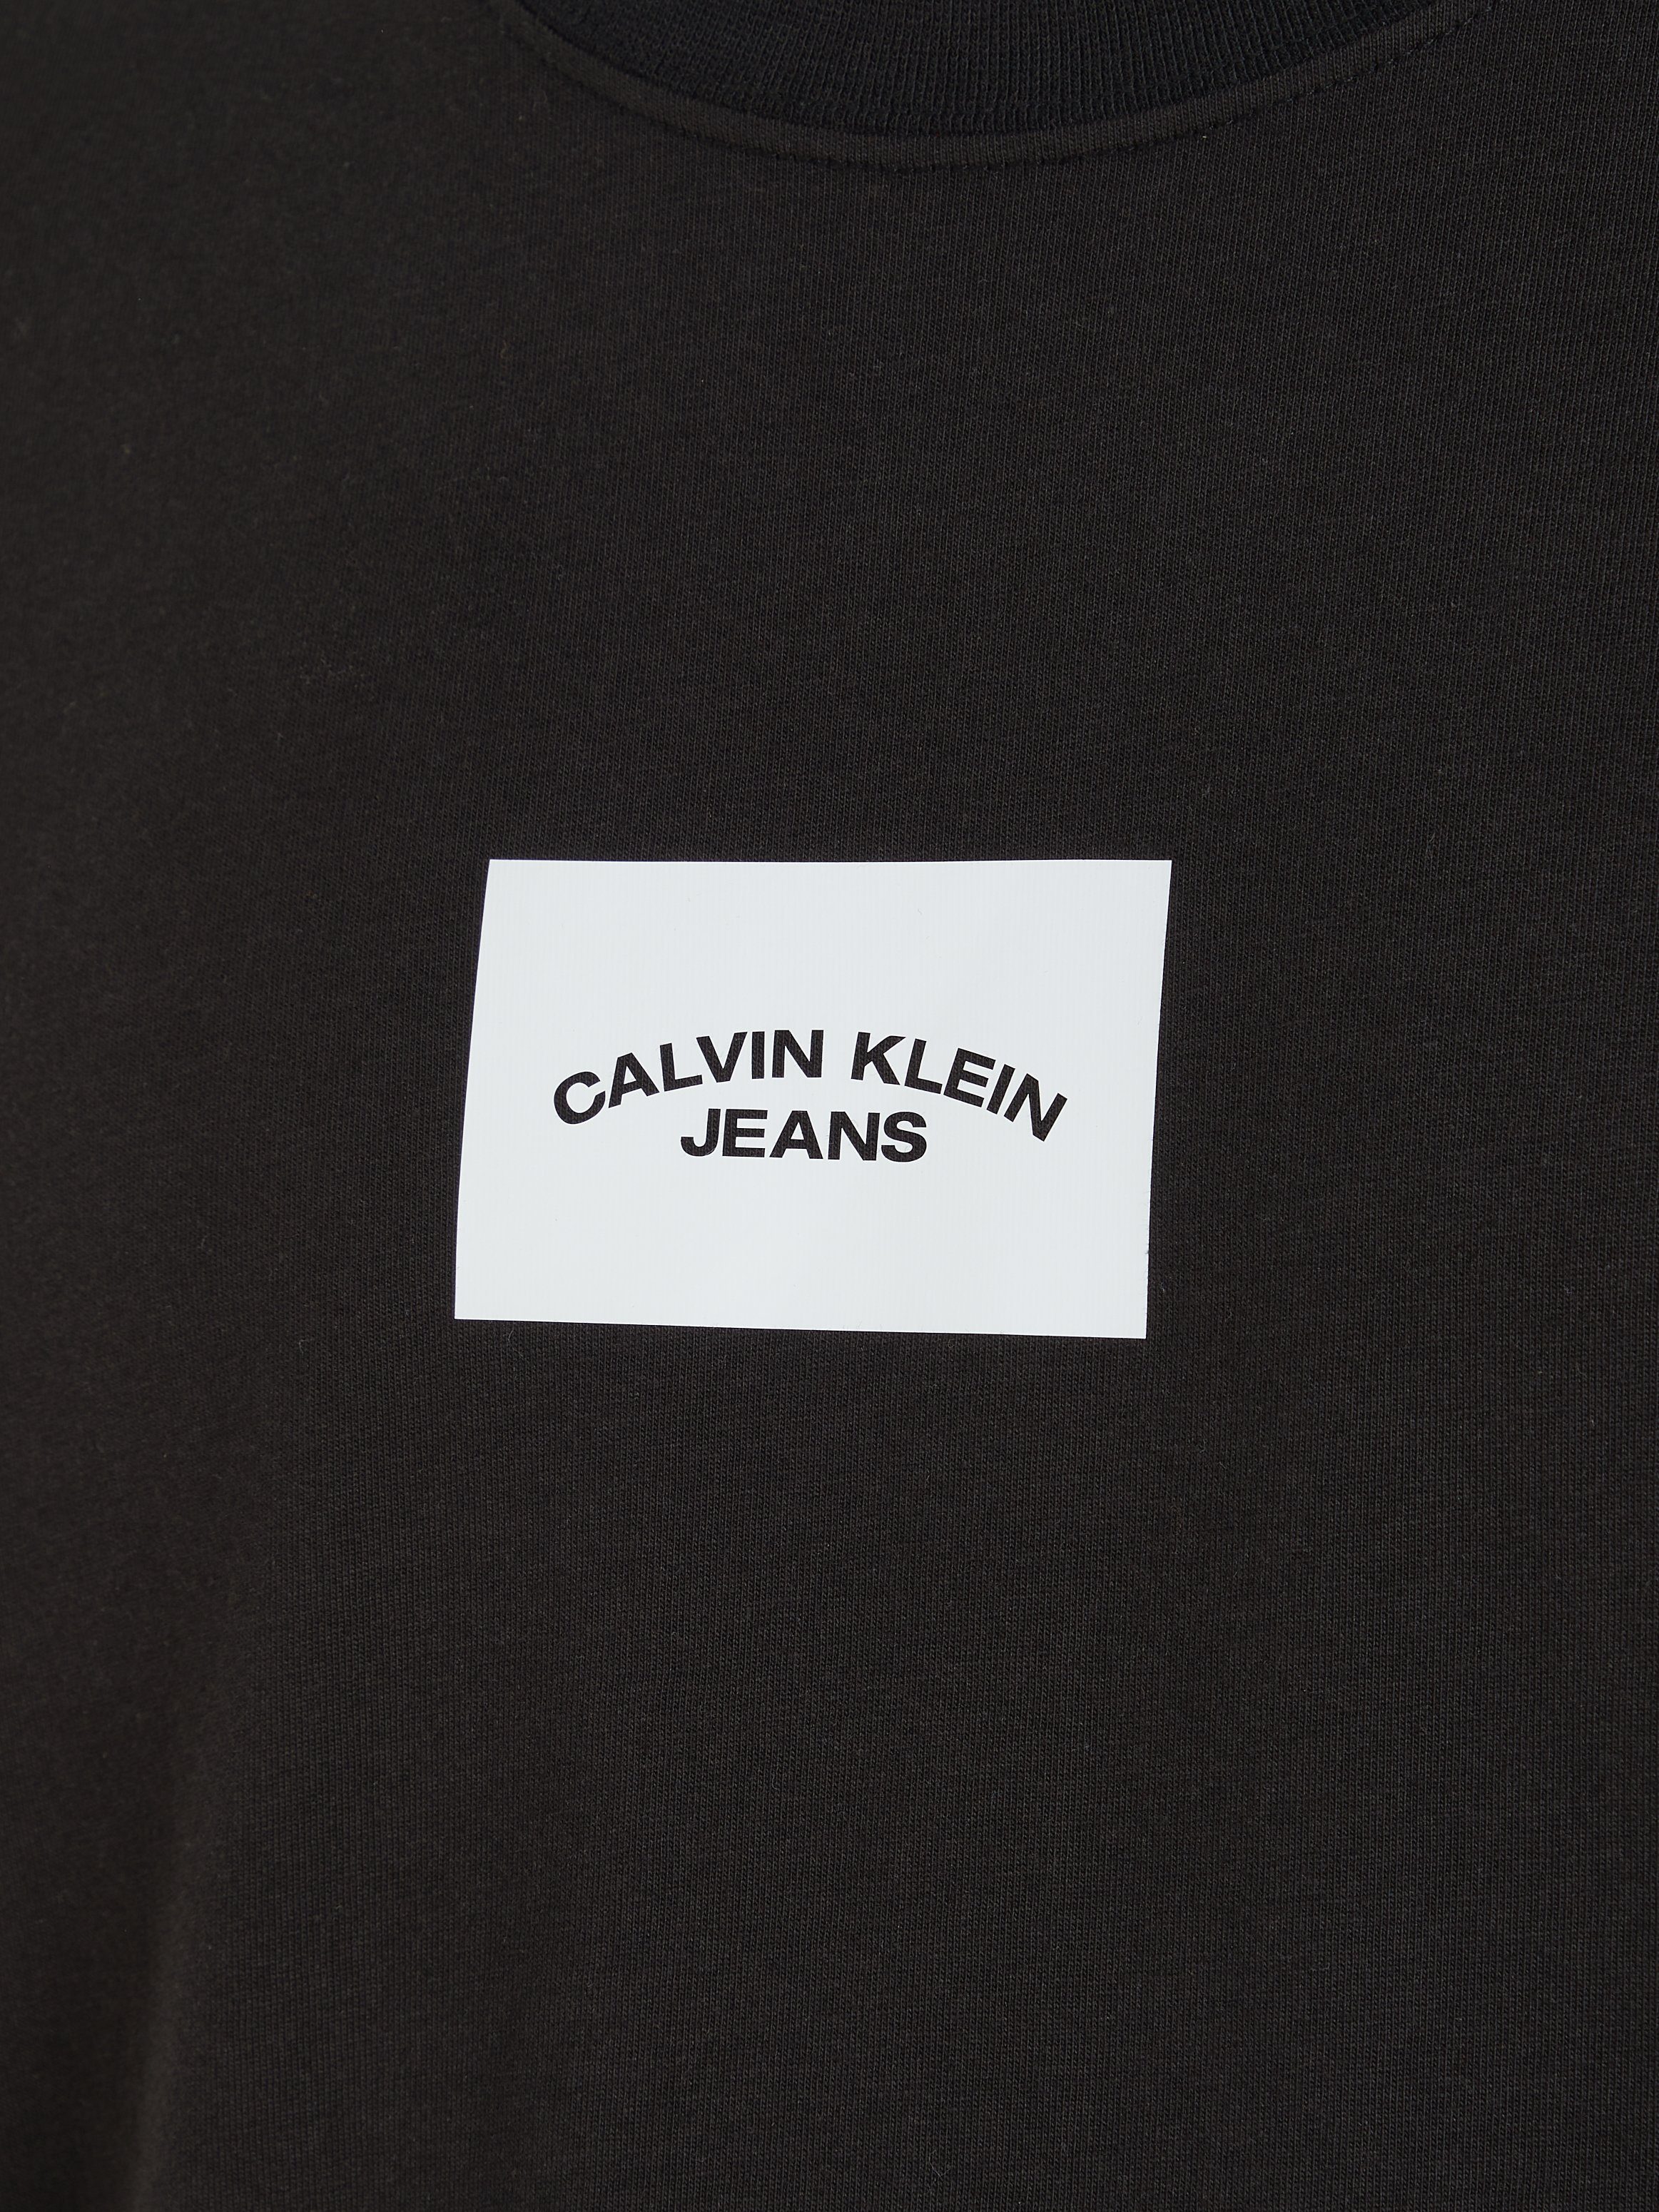 Klein T-Shirt Black CENTER Ck Calvin BOX Jeans SMALL TEE